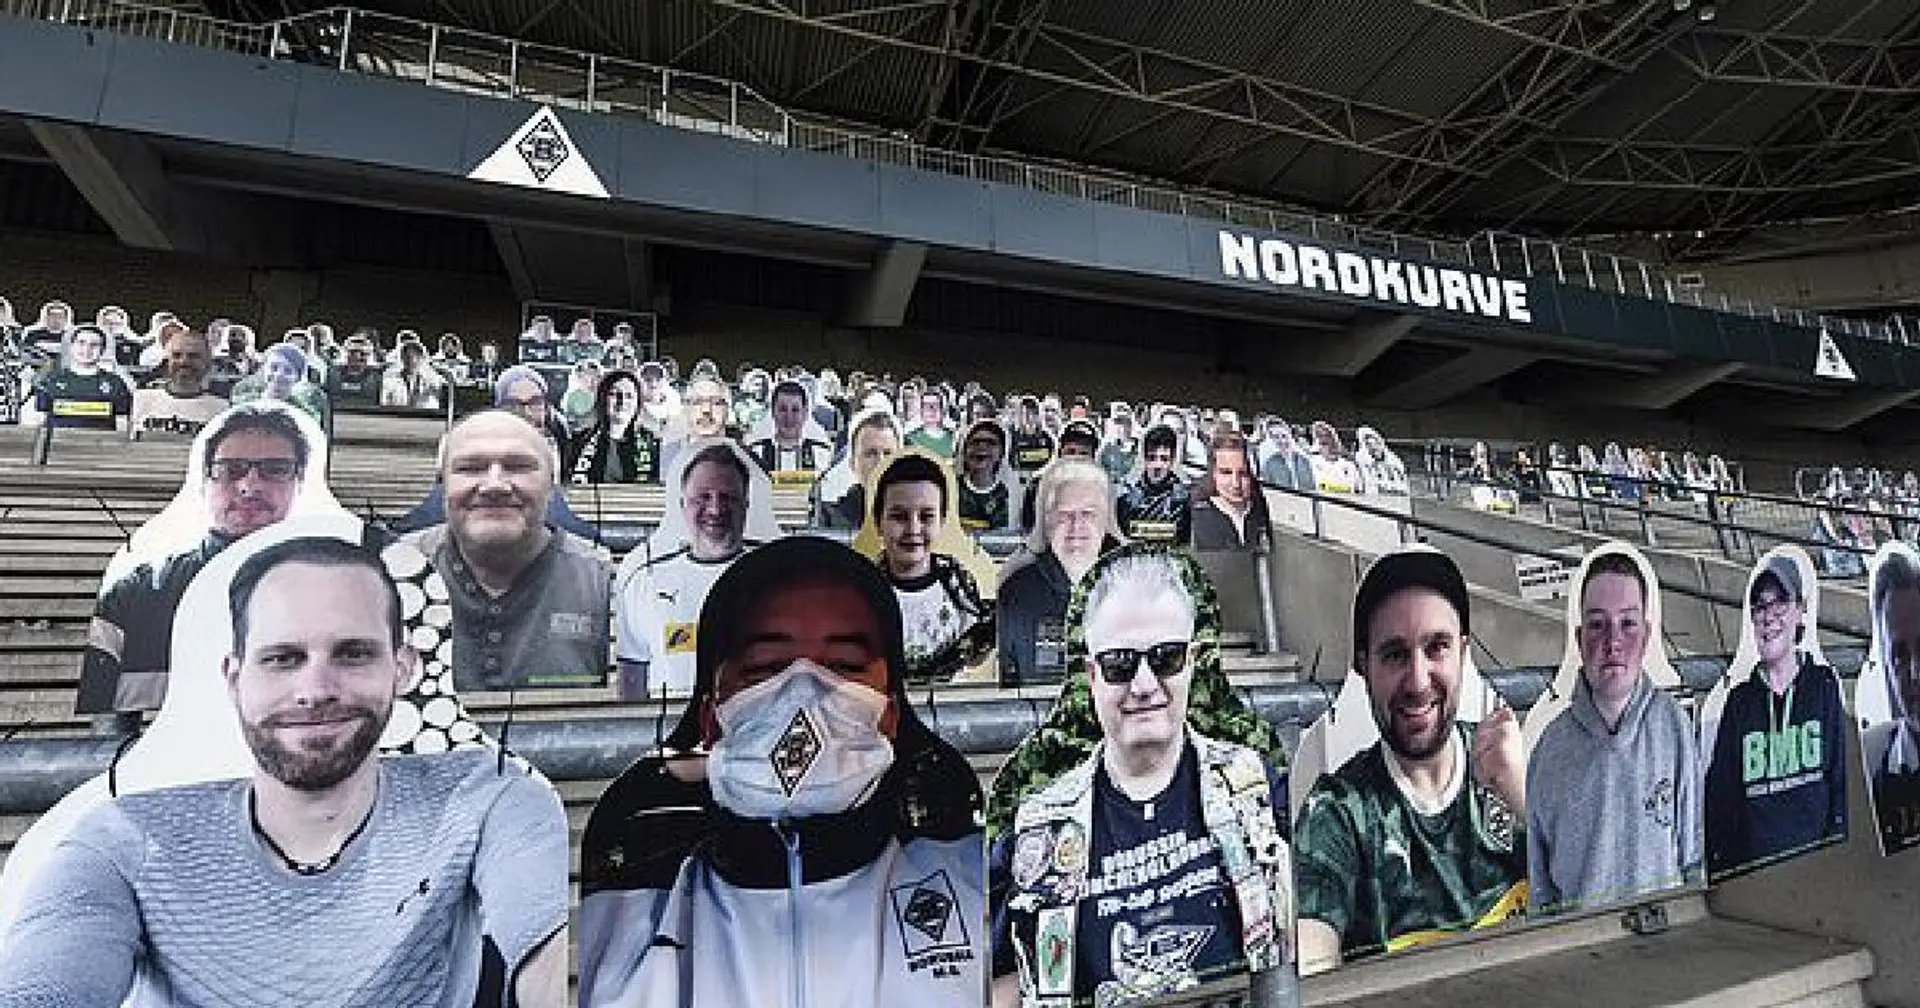 Borussia Monchengladbach fans have a hilarious idea to make stadiums seem full once Bundesliga resumes